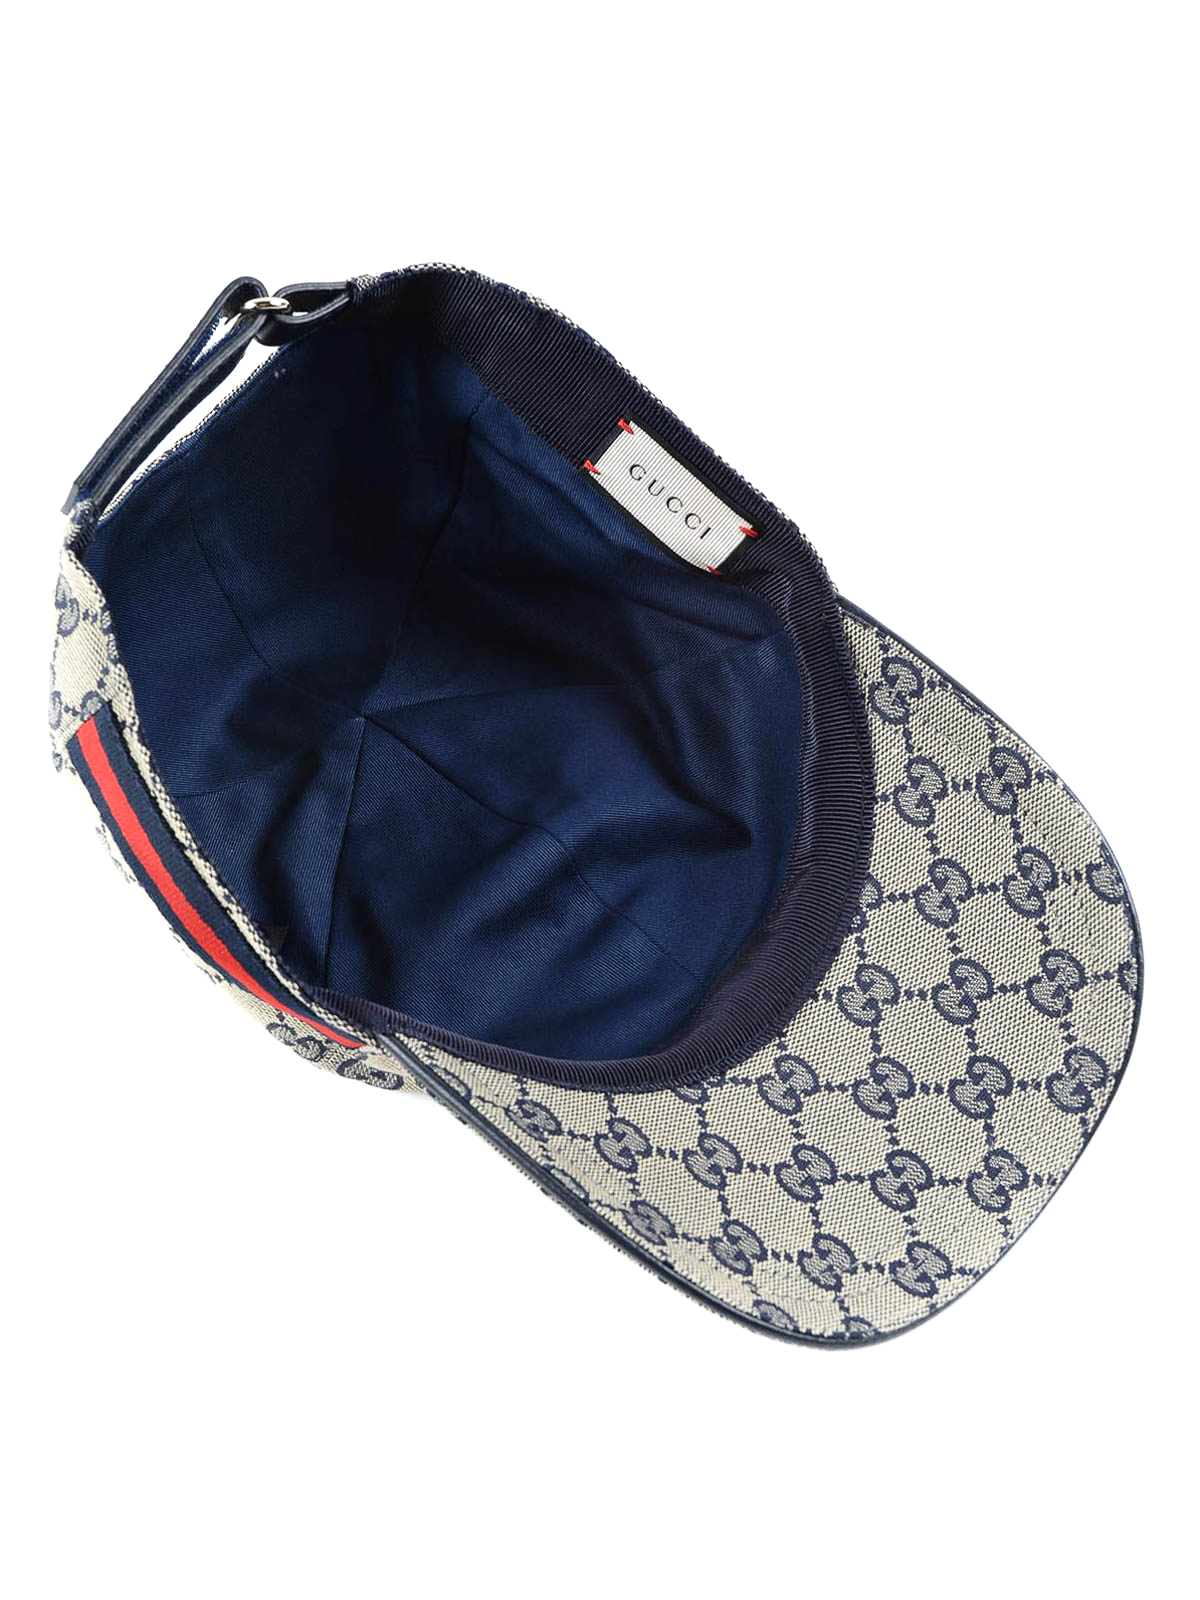 Generalife Port Deltage Hats & caps Gucci - GG SUPREME BASEBALL HAT - 200035KQW6G4080 | iKRIX.com